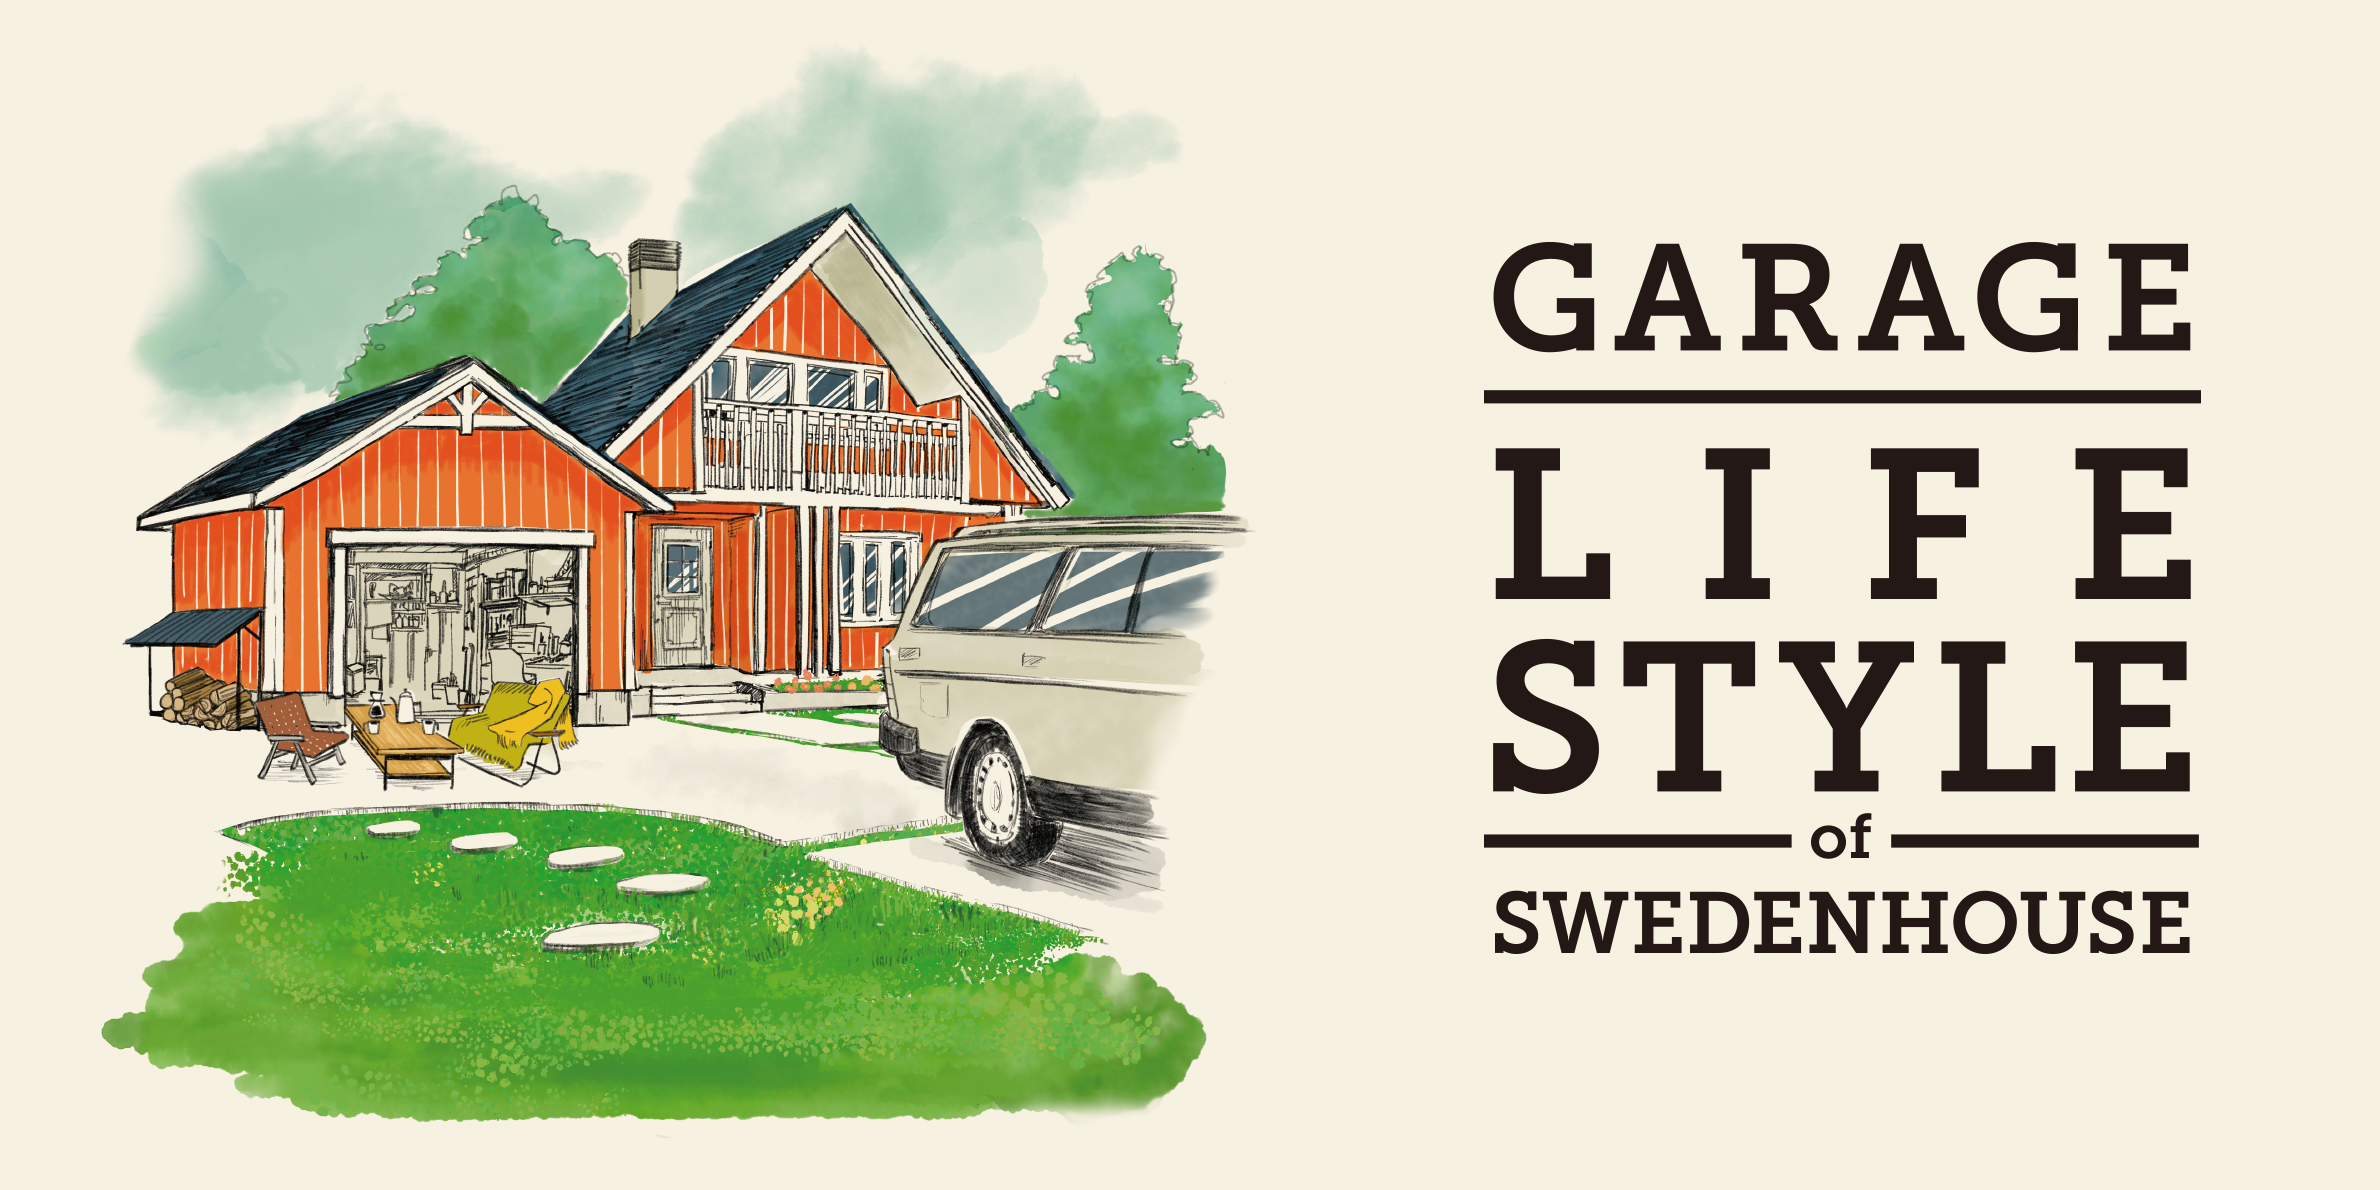 GARAGE LIFE STYLE OF SWEDENHOUSE